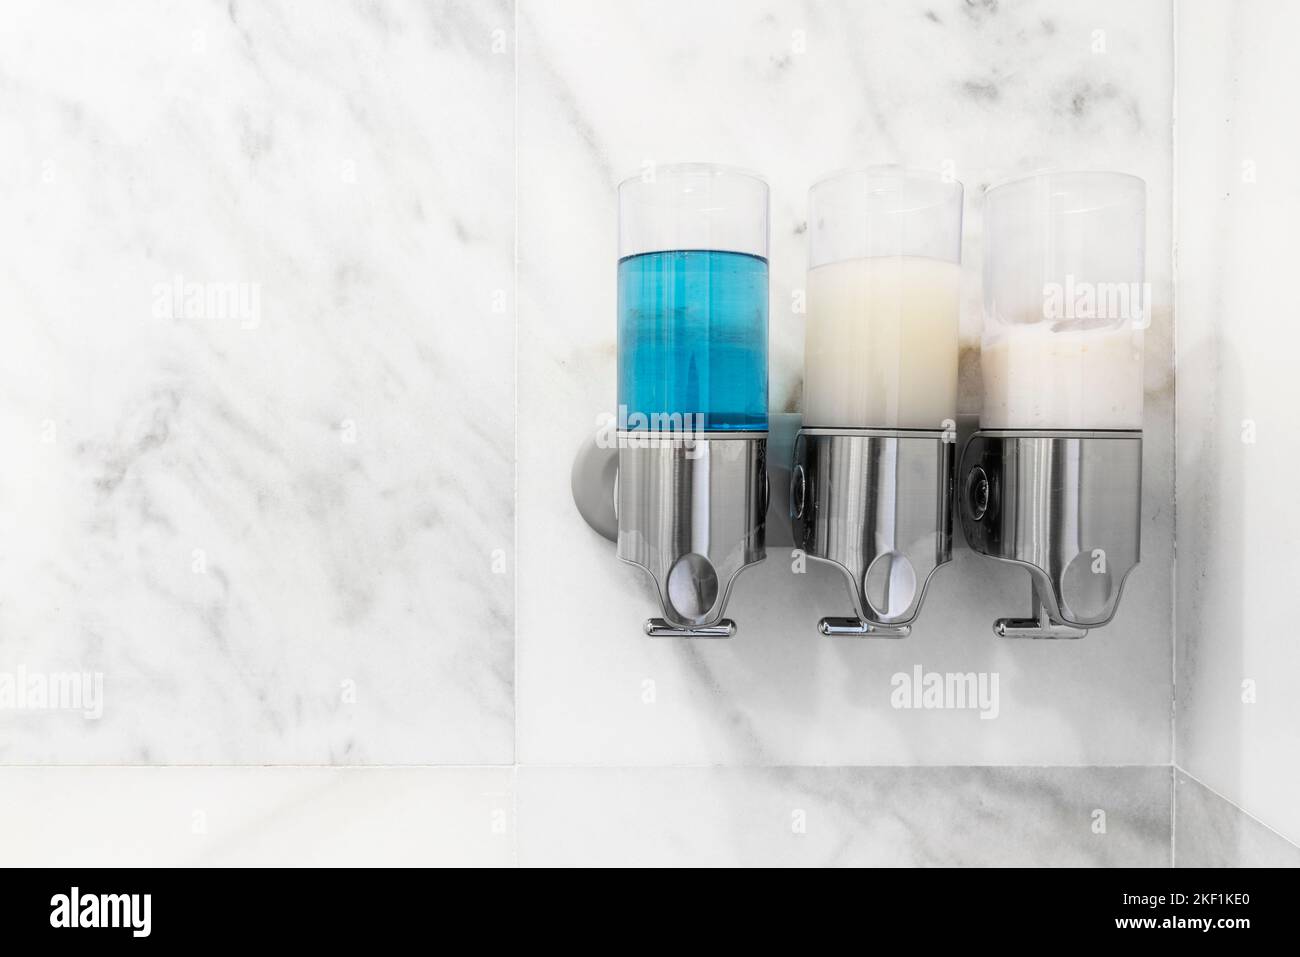 https://c8.alamy.com/comp/2KF1KE0/soap-shampoo-and-softener-dispensers-on-the-wall-of-a-shower-tiled-in-white-marble-2KF1KE0.jpg